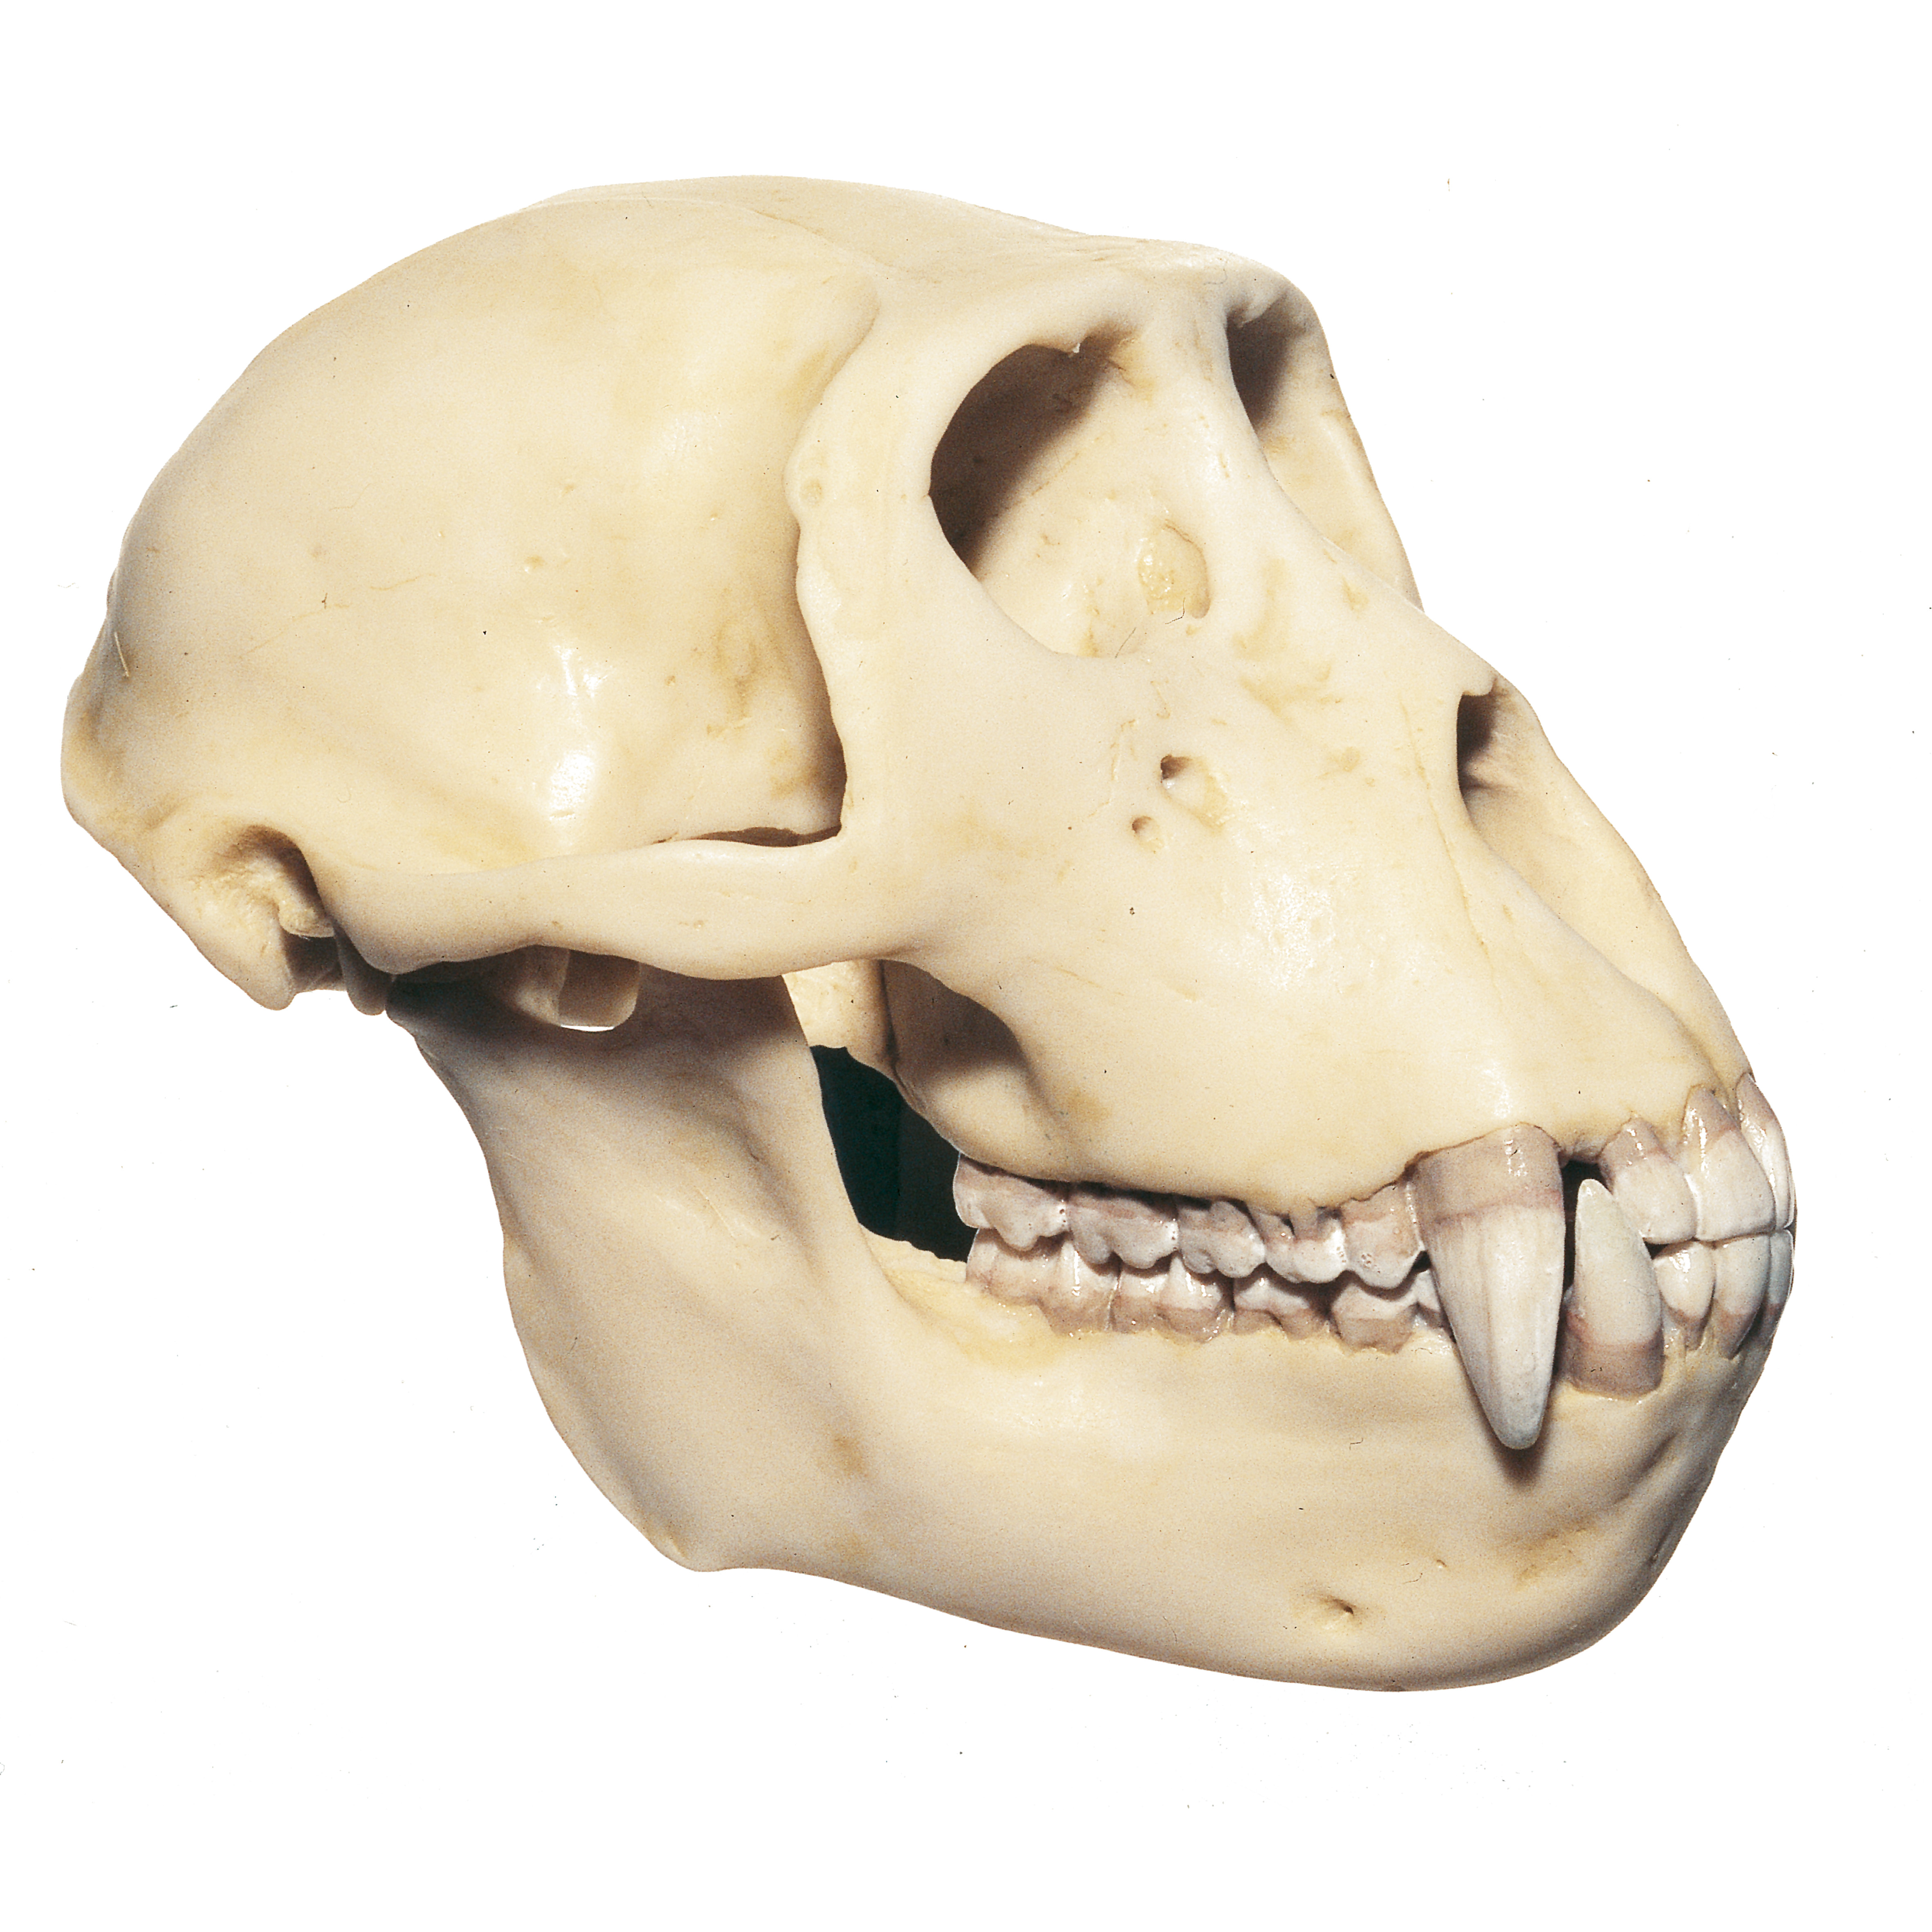 Rhesus Monkey Skull, Male